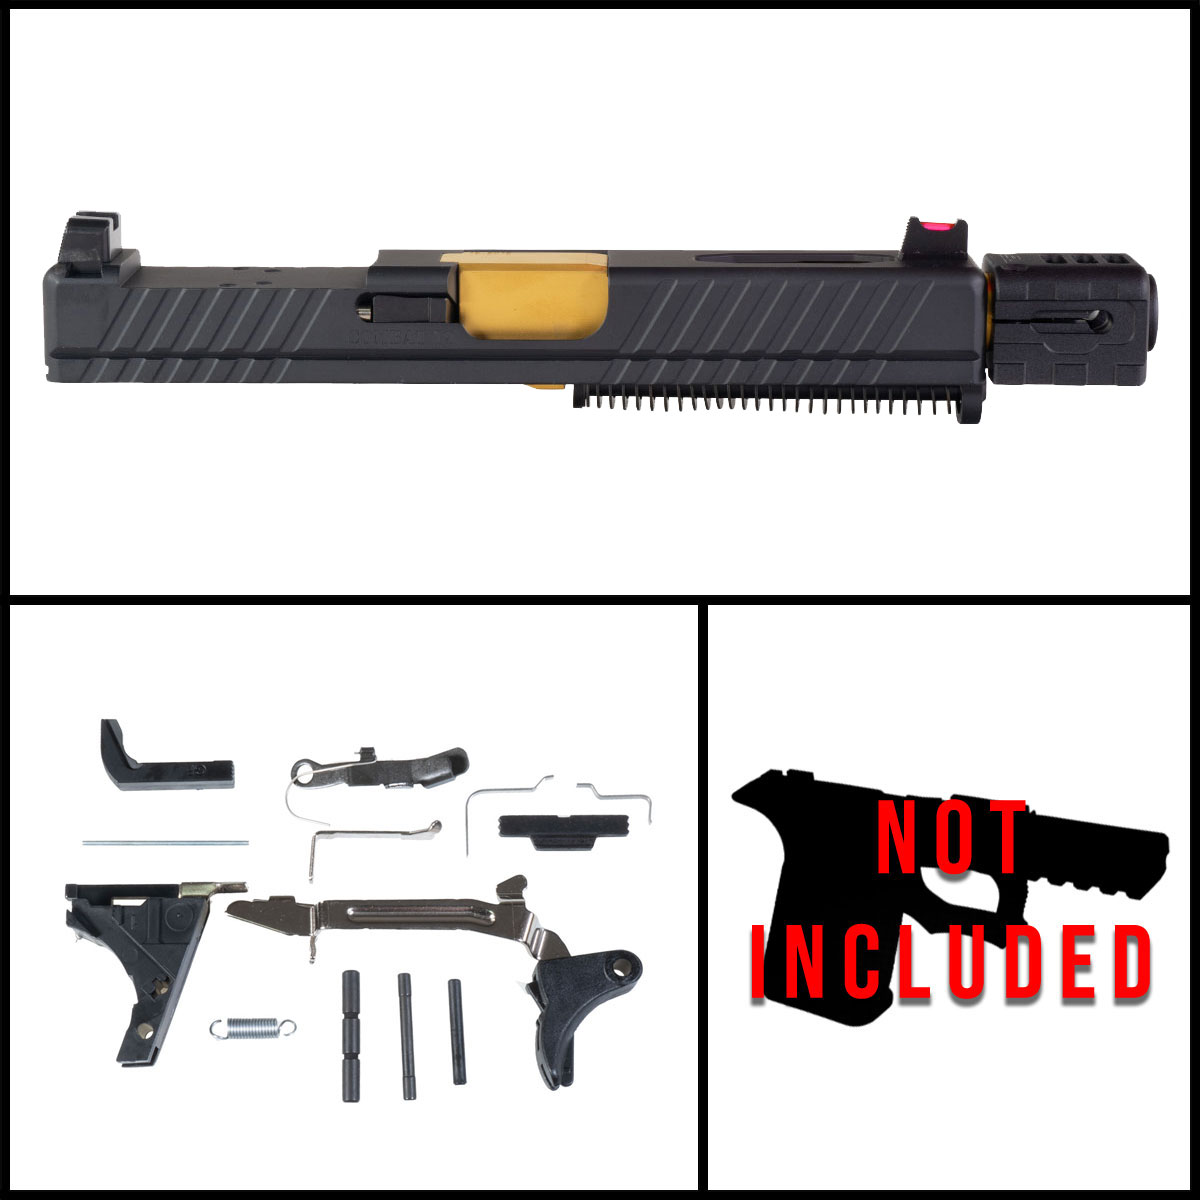 DTT 'Fanrong w/ Sylvan Arms Compensator' 9mm Full Pistol Build Kit (Everything Minus Frame) - Glock 19 Gen 1-3 Compatible